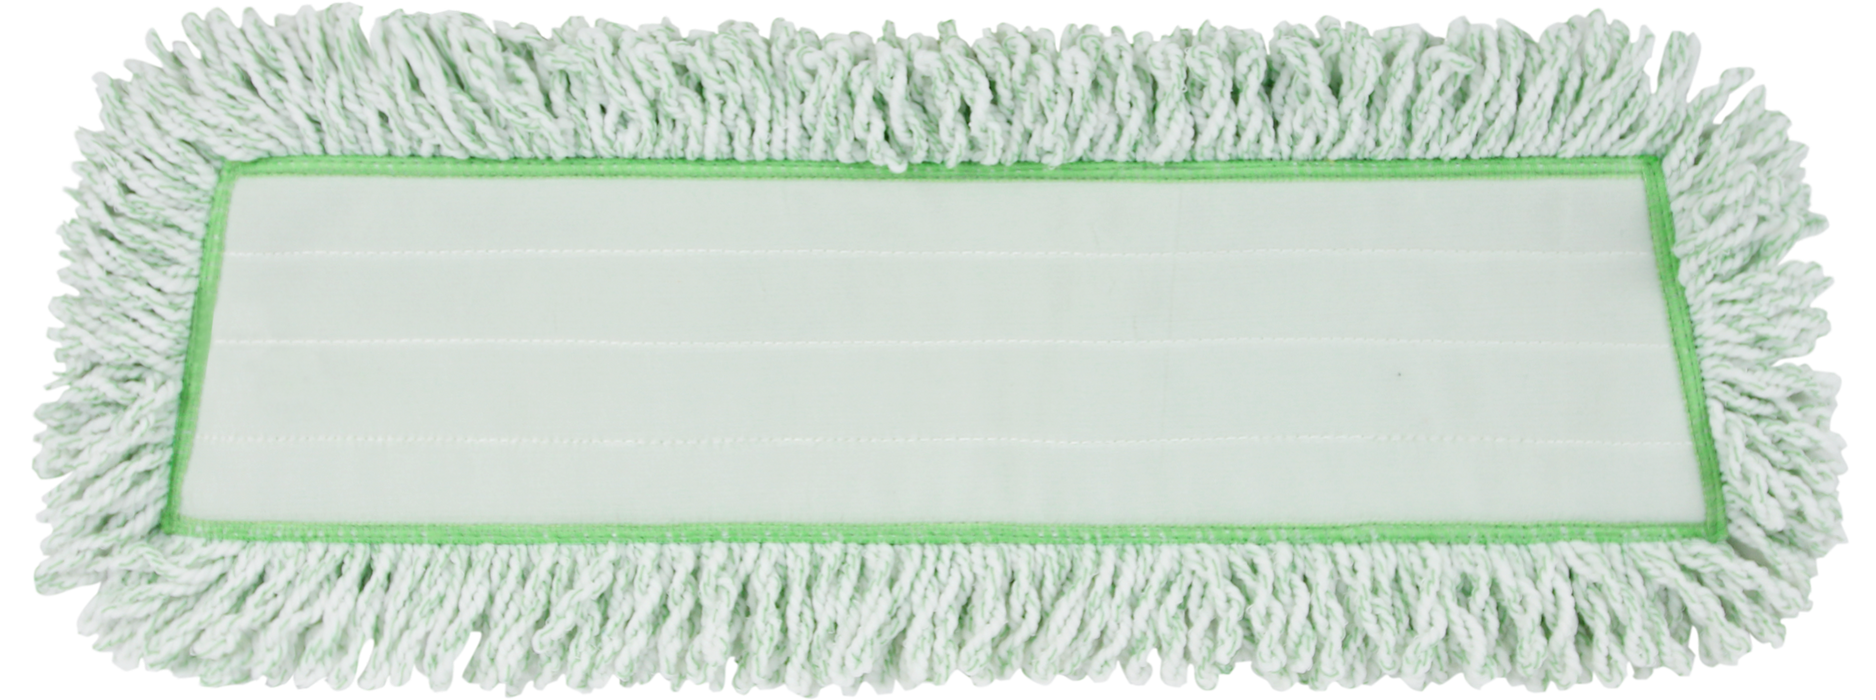 Microfiber Woven Plush Flat Dry Mop